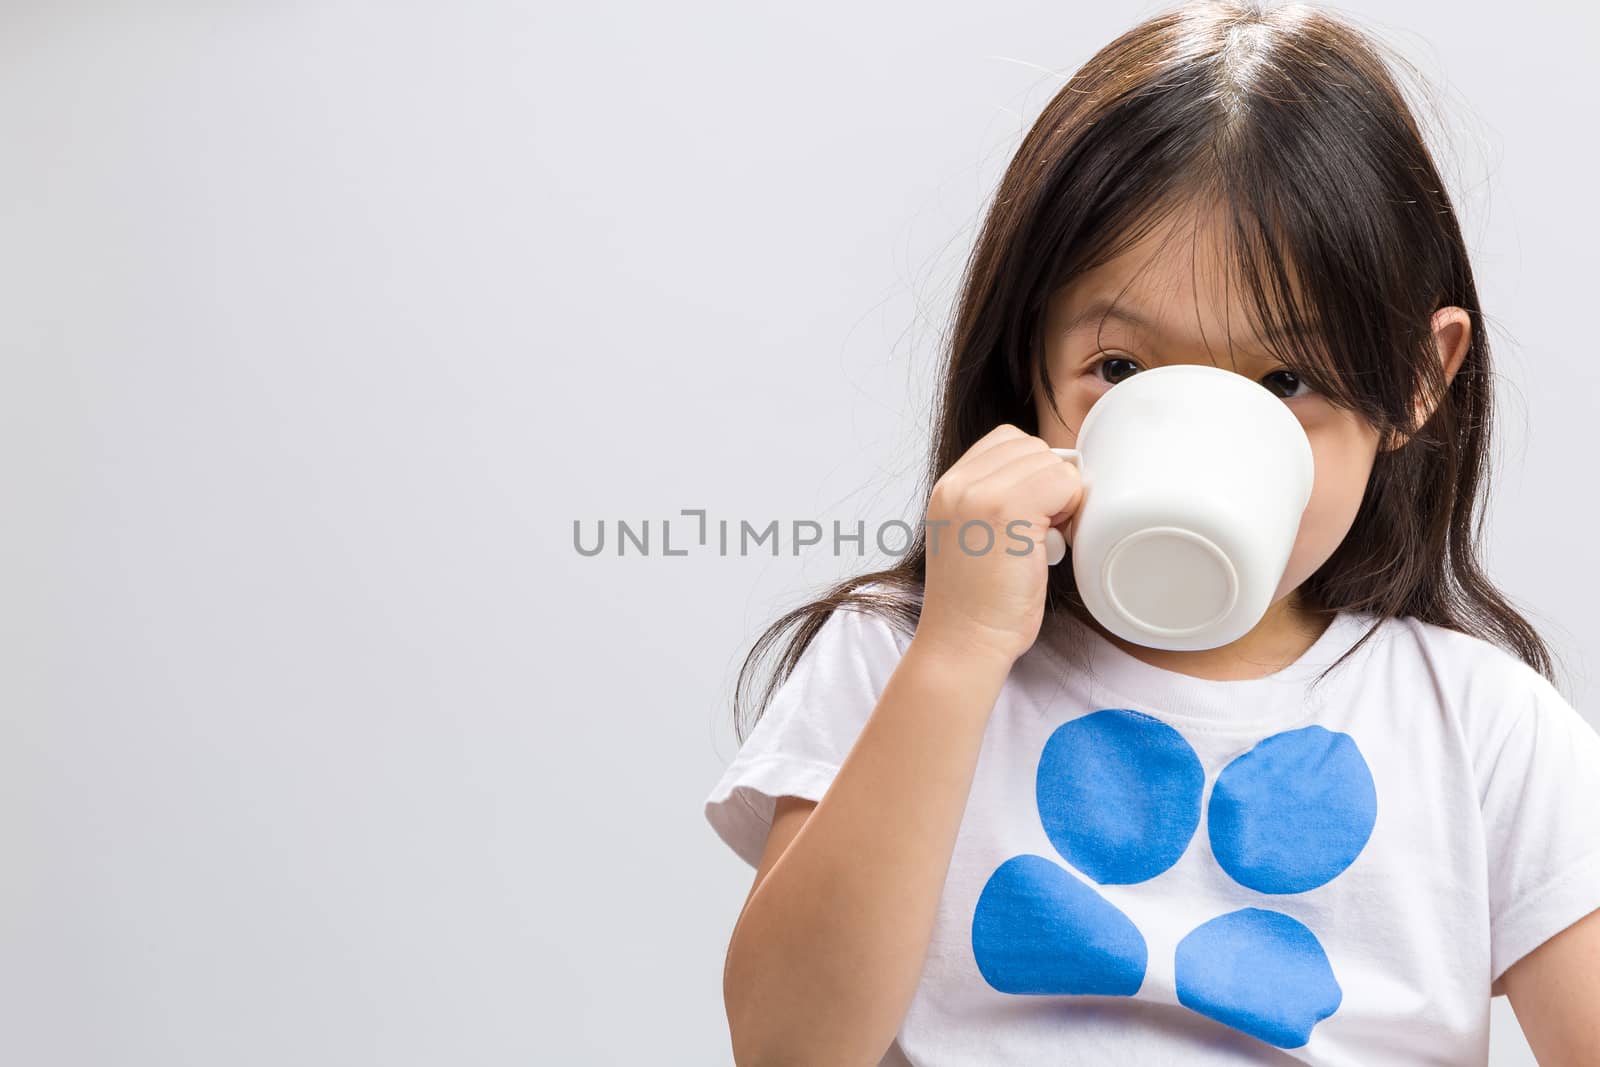 Kid drinking milk on studio isolated white background.